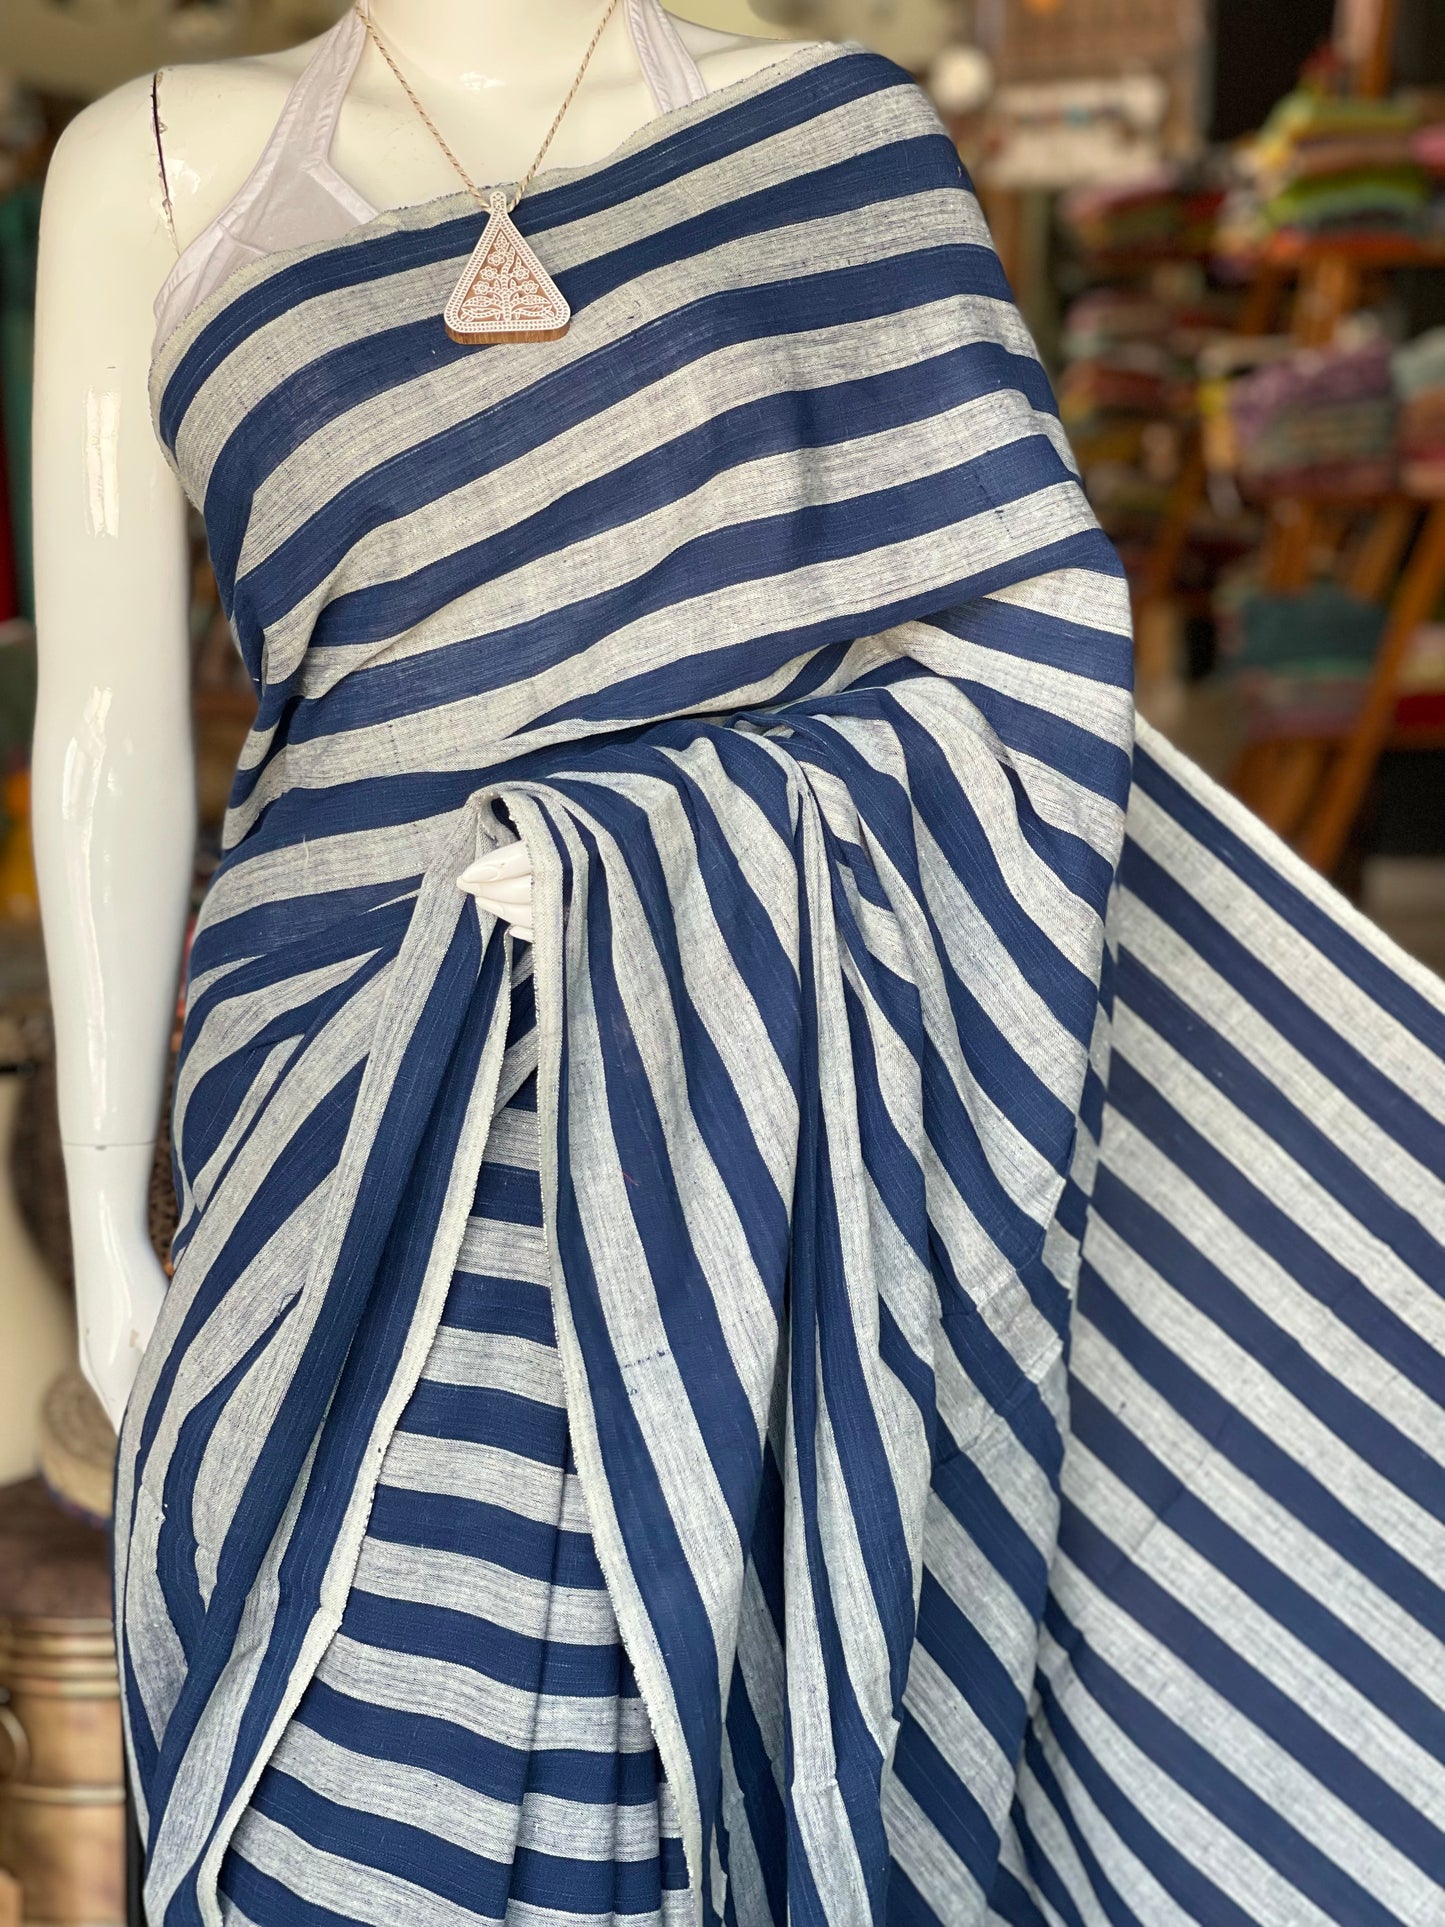 Indigo natural dyed, hand spun, hand woven stripes cotton fabric